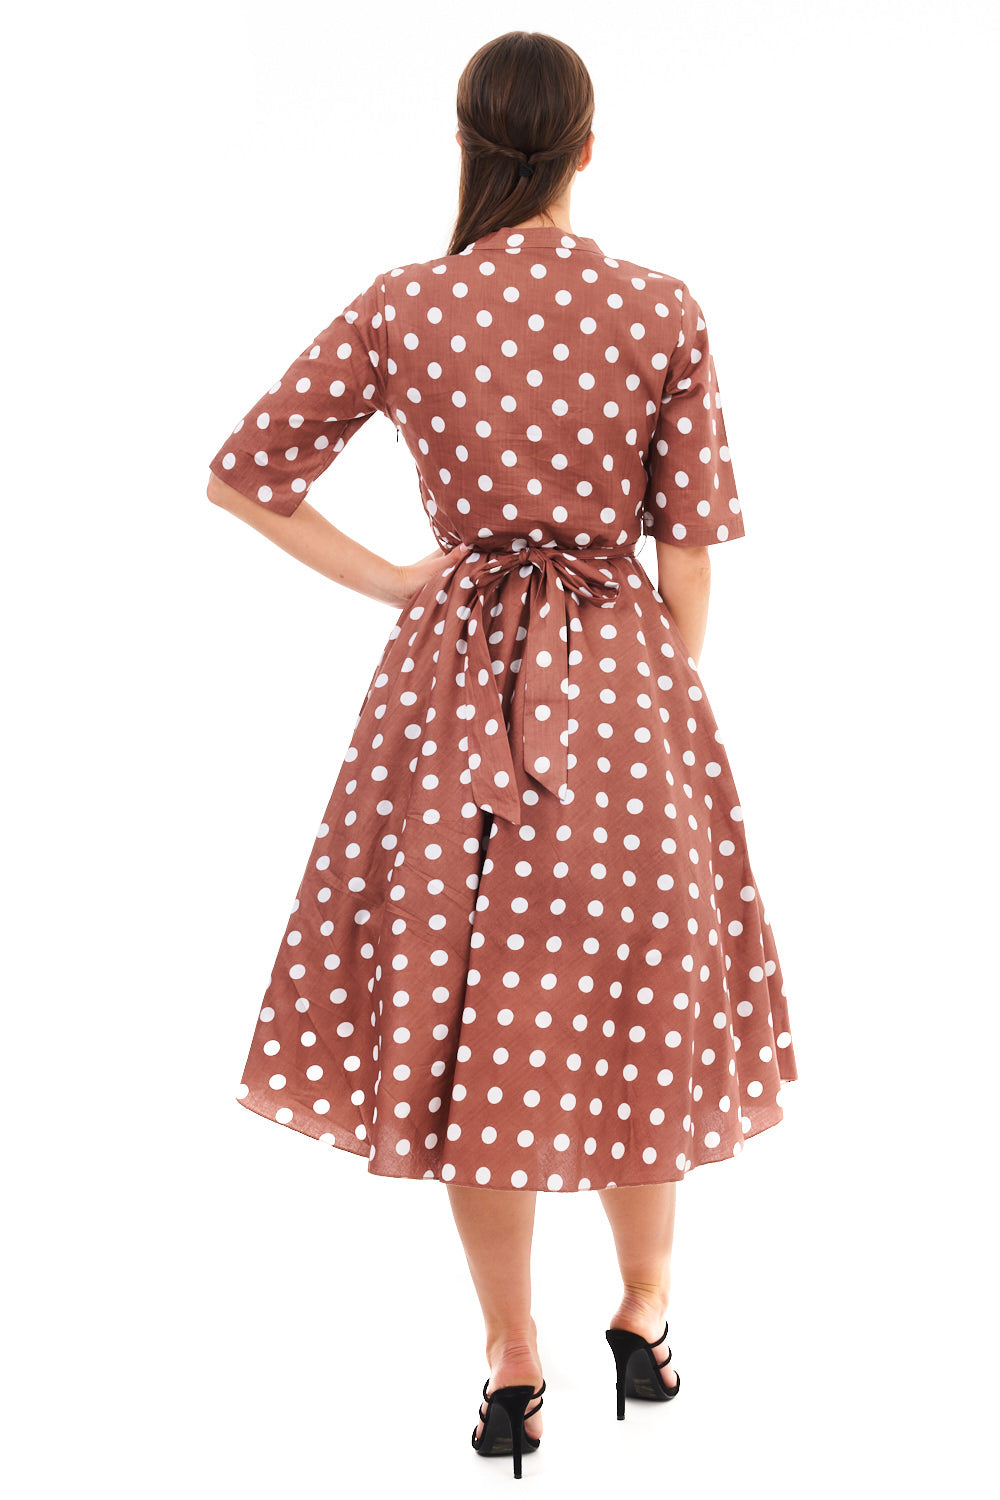 Retro Vintage 1940's Polka Dot Shirt Dress in Beige